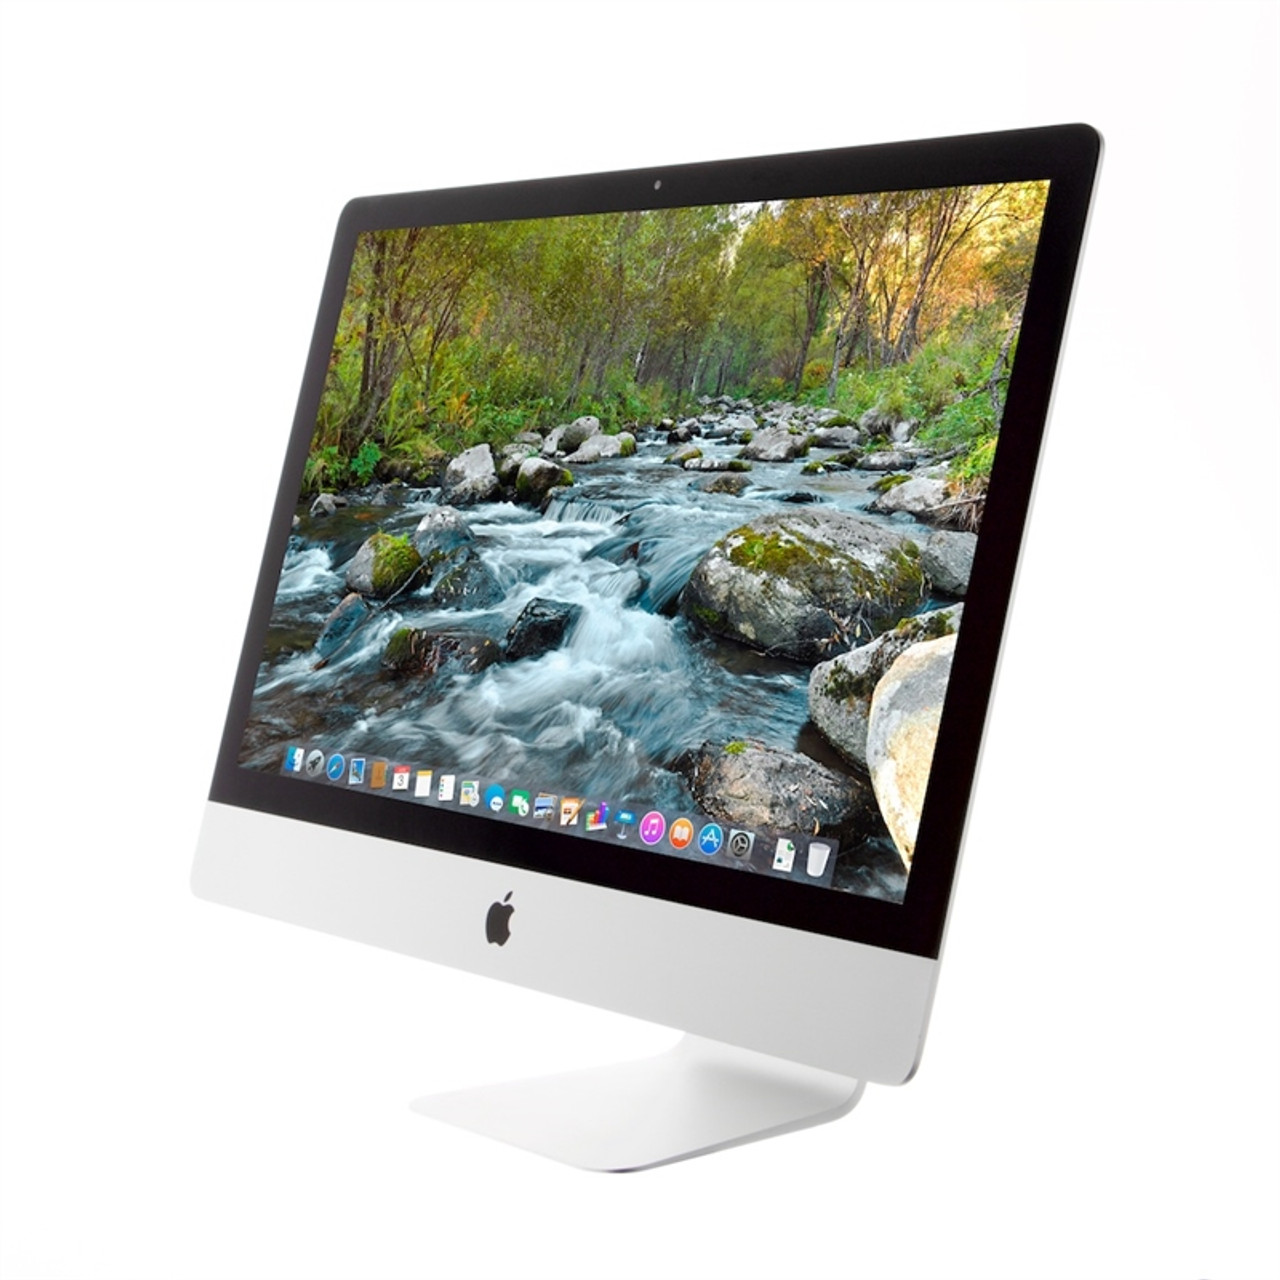 iMac 27インチ Late 2012 i5-